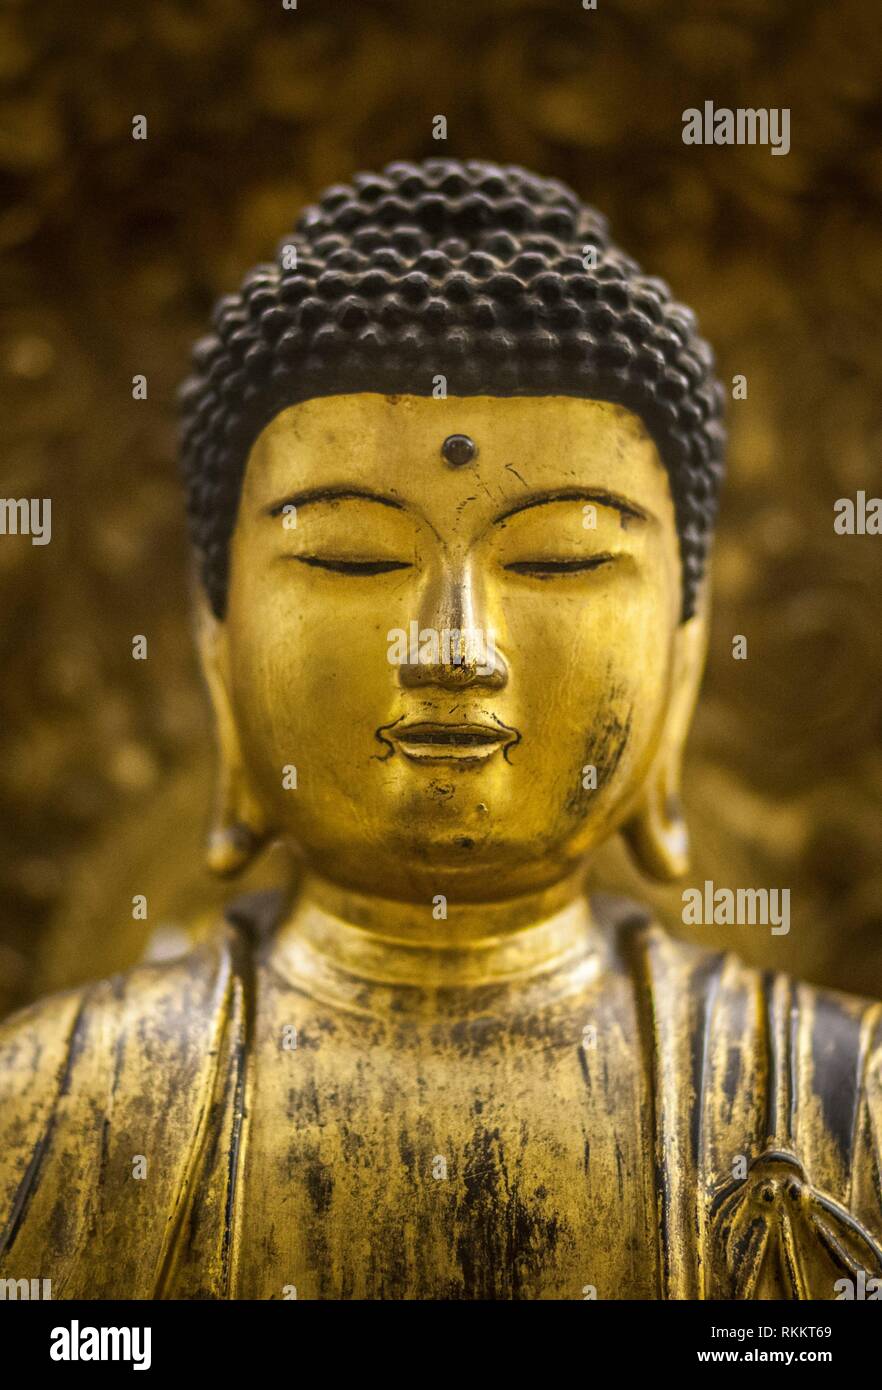 Thailand golden buddha figurine Well-dressed. Closeup. Stock Photo